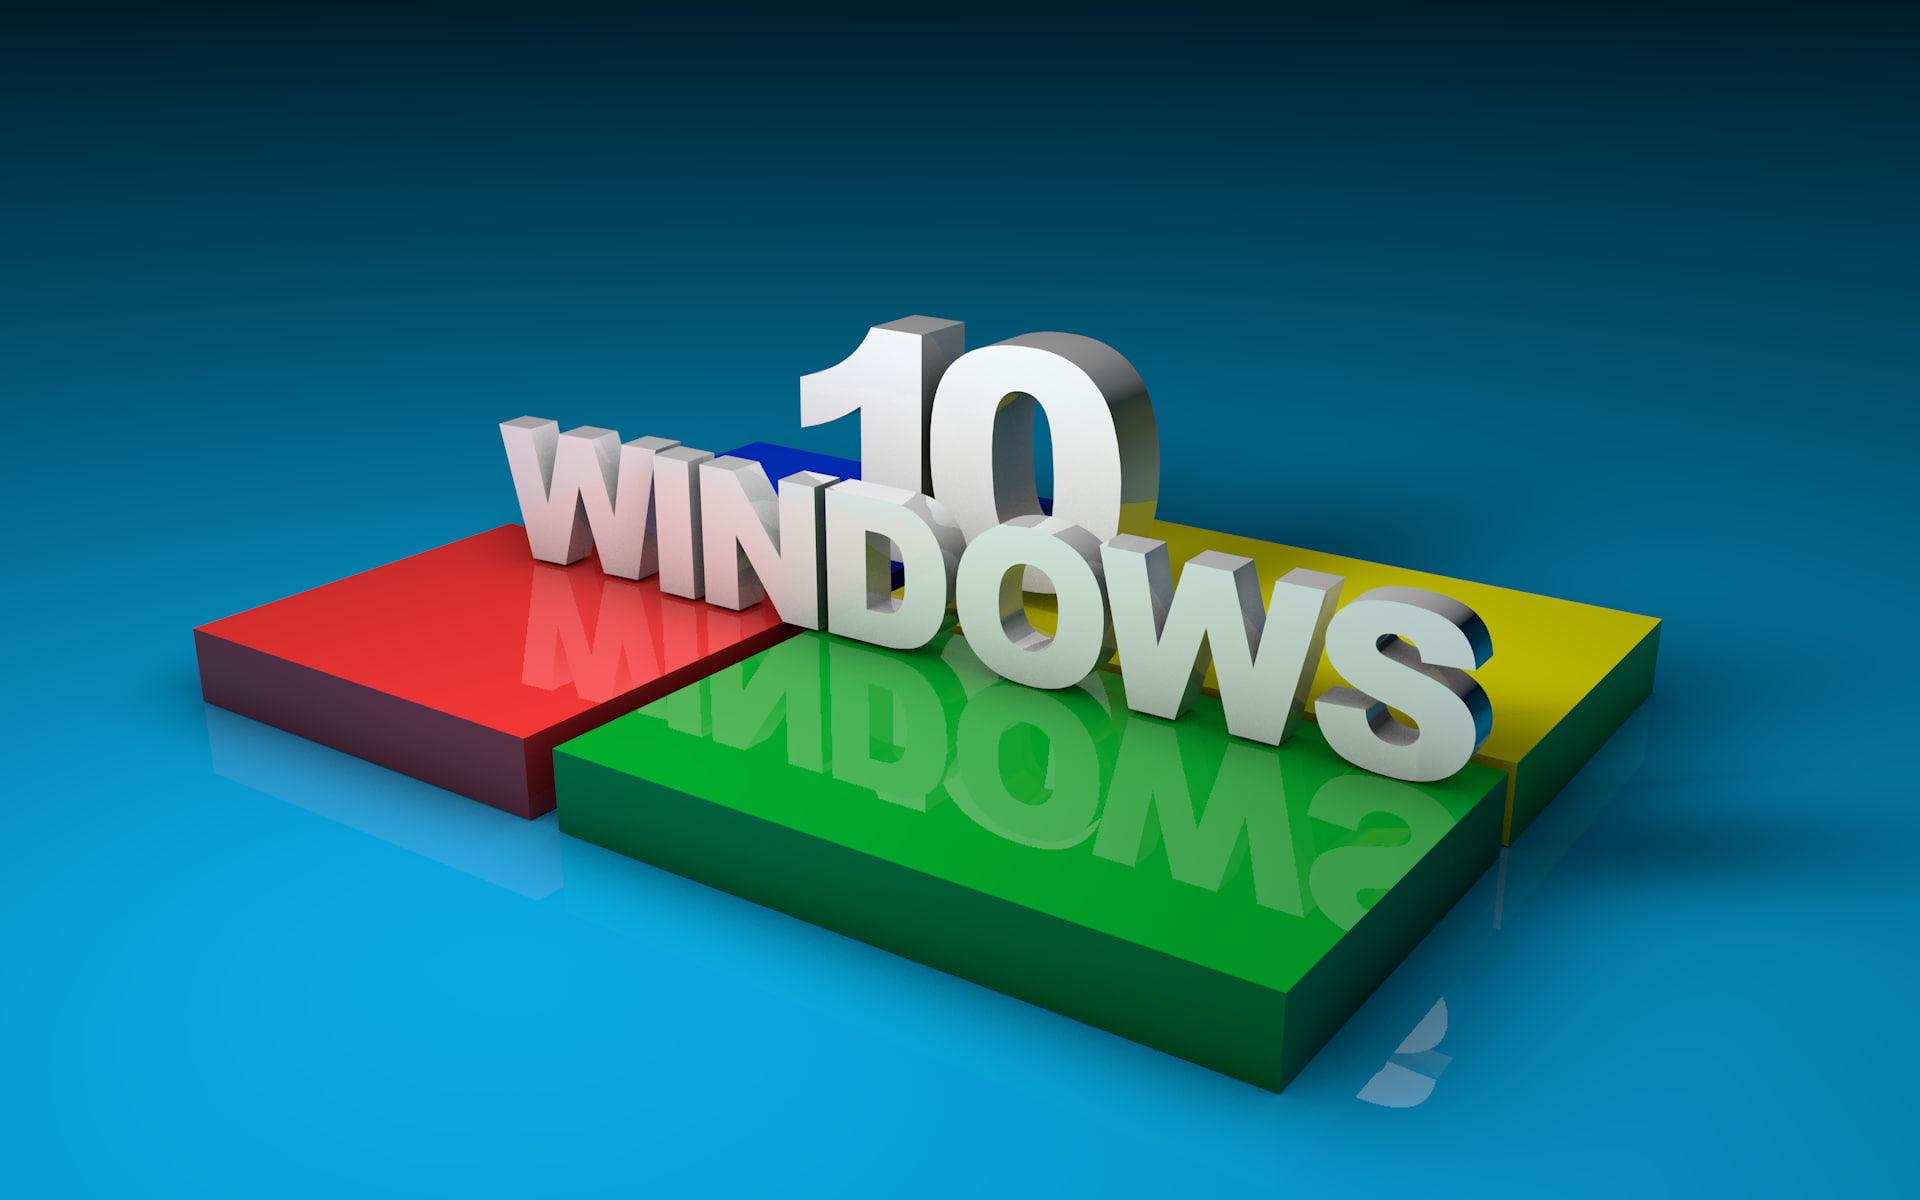 Windows 10, simple, digital art, operating system, reflection